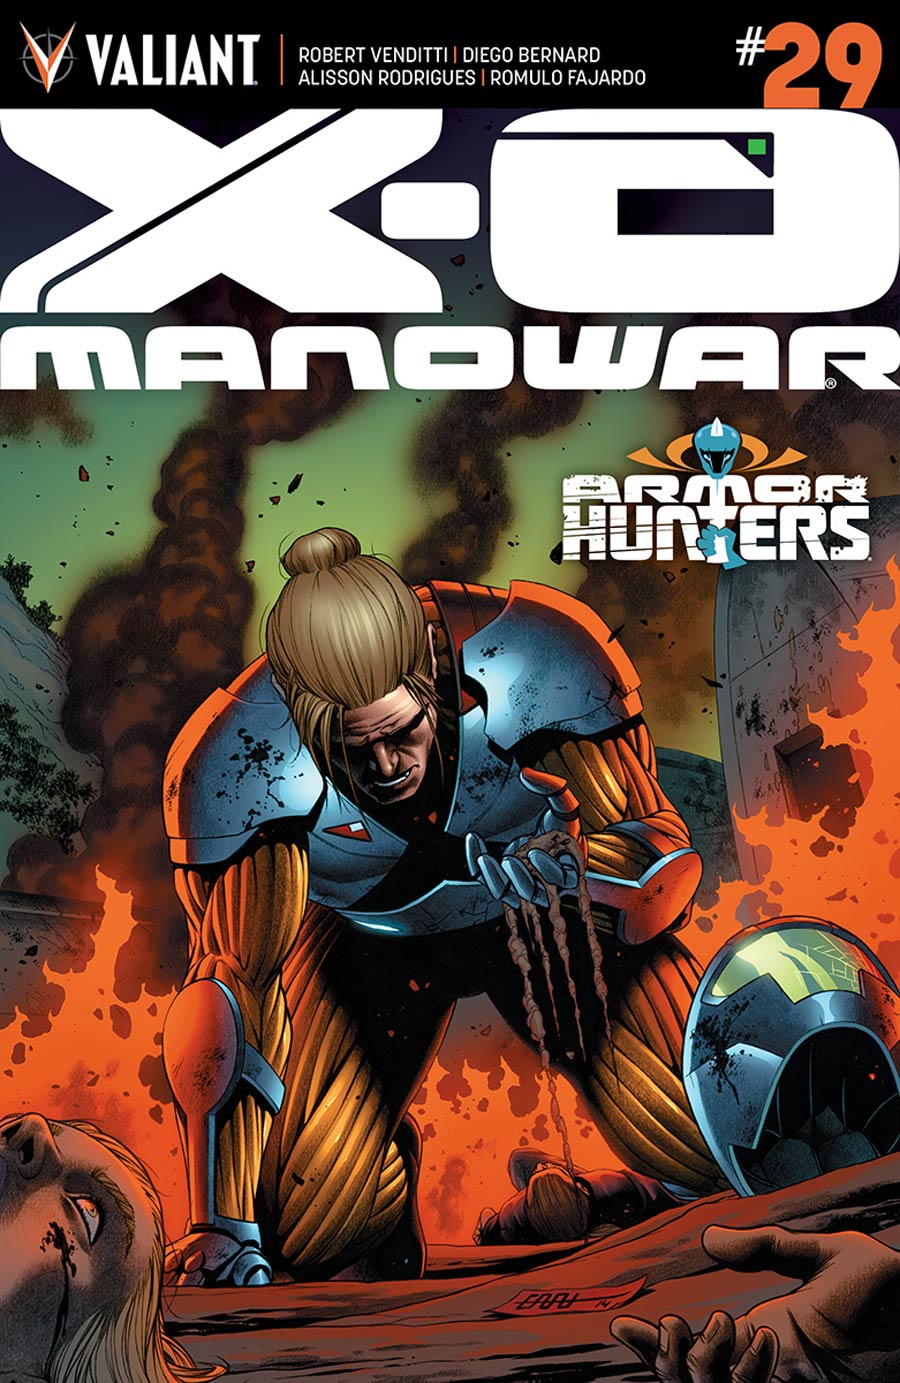 X-O Manowar Vol 3 #29 Cover A Regular CAFU Cover (Armor Hunters Tie-In)